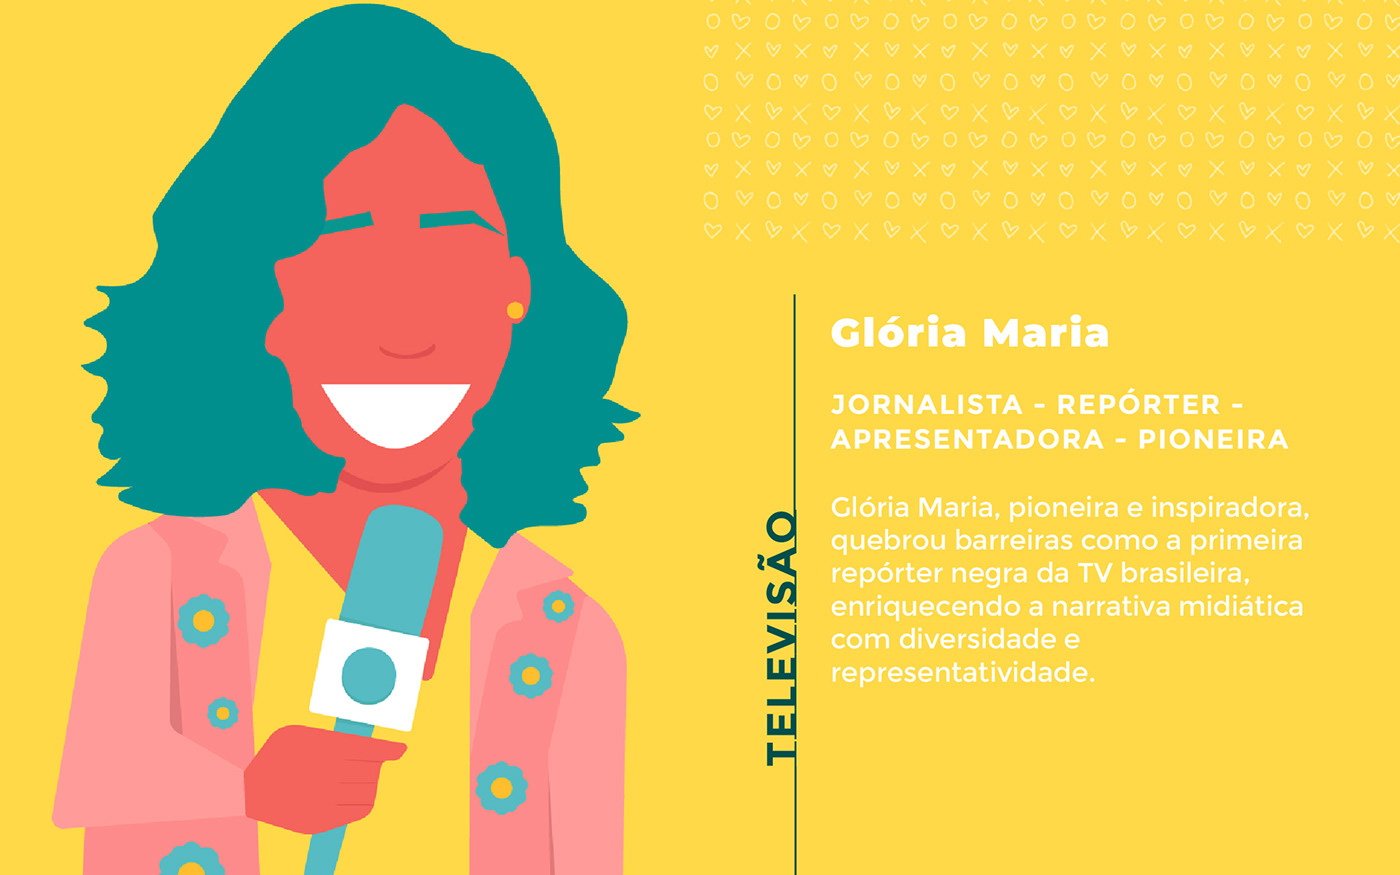 An illustrated portrait of Gloria Maria, a famous black brazilian reporter.